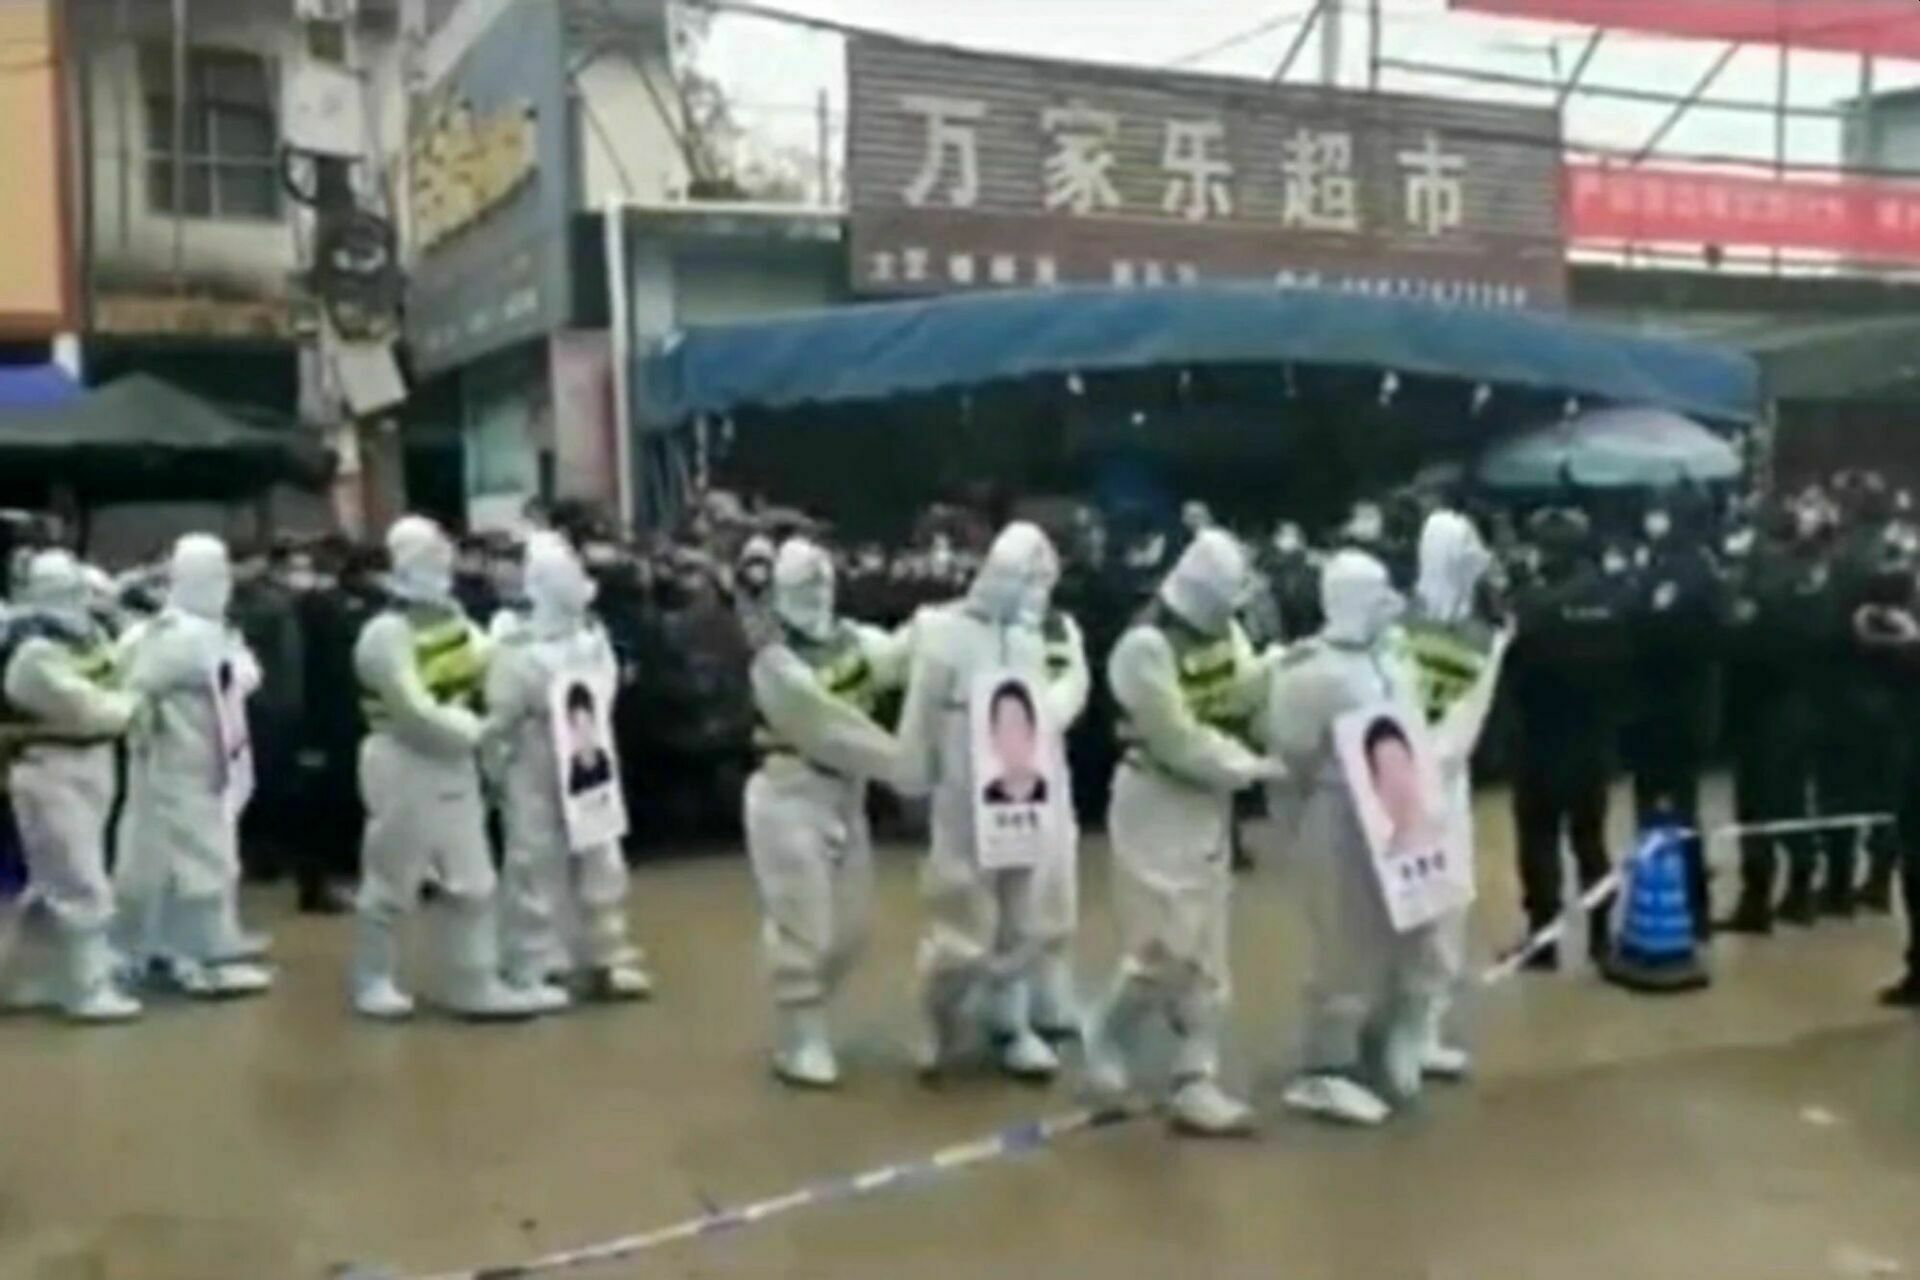 This is how quarantine violators in Jingxi, China were exposed to universal censure